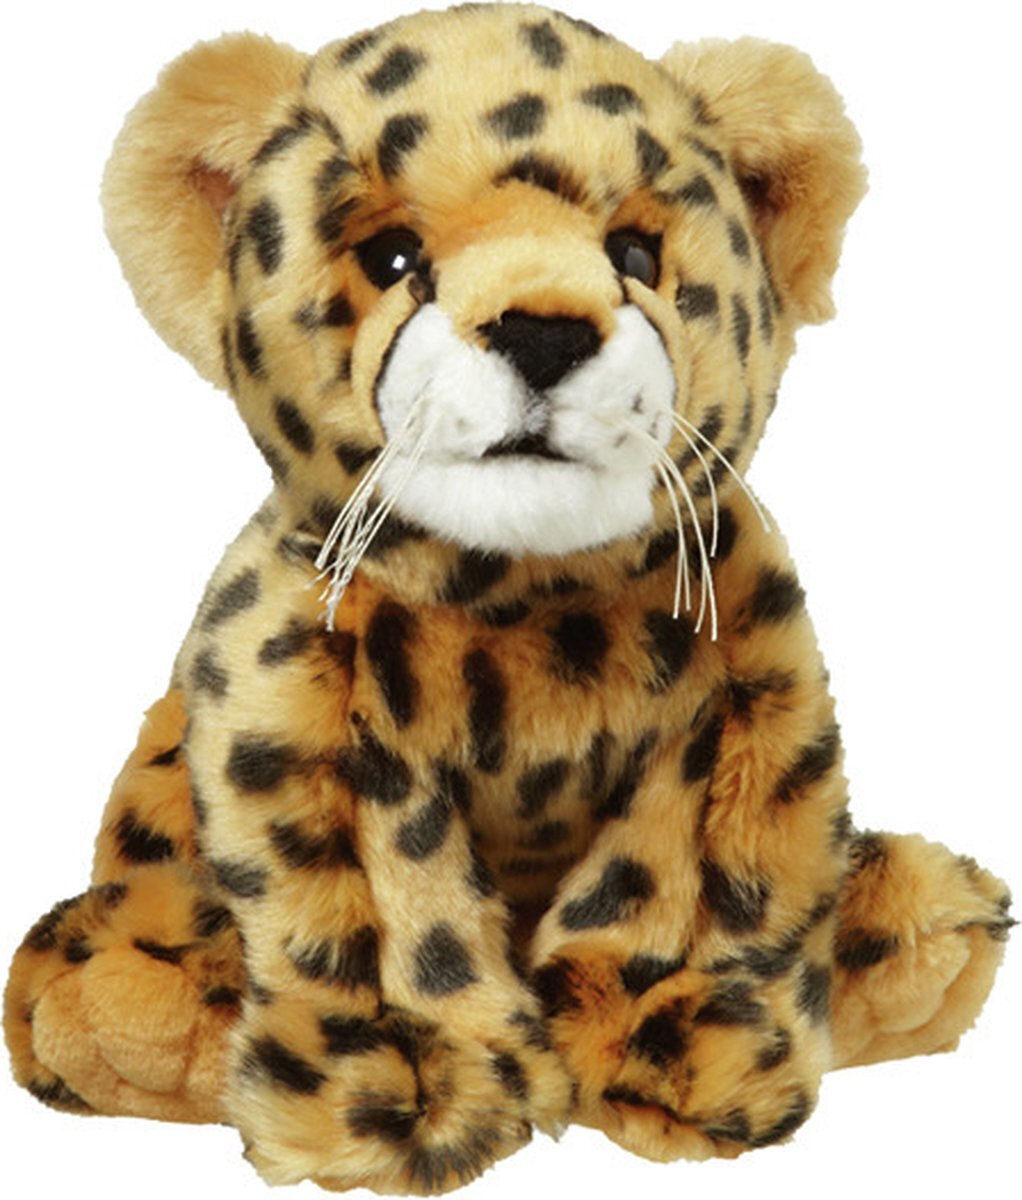 Nature Planet Pluche Cheetah/Jachtluipaard knuffel van 22 cm - Dieren speelgoed knuffels cadeau - Safari dieren